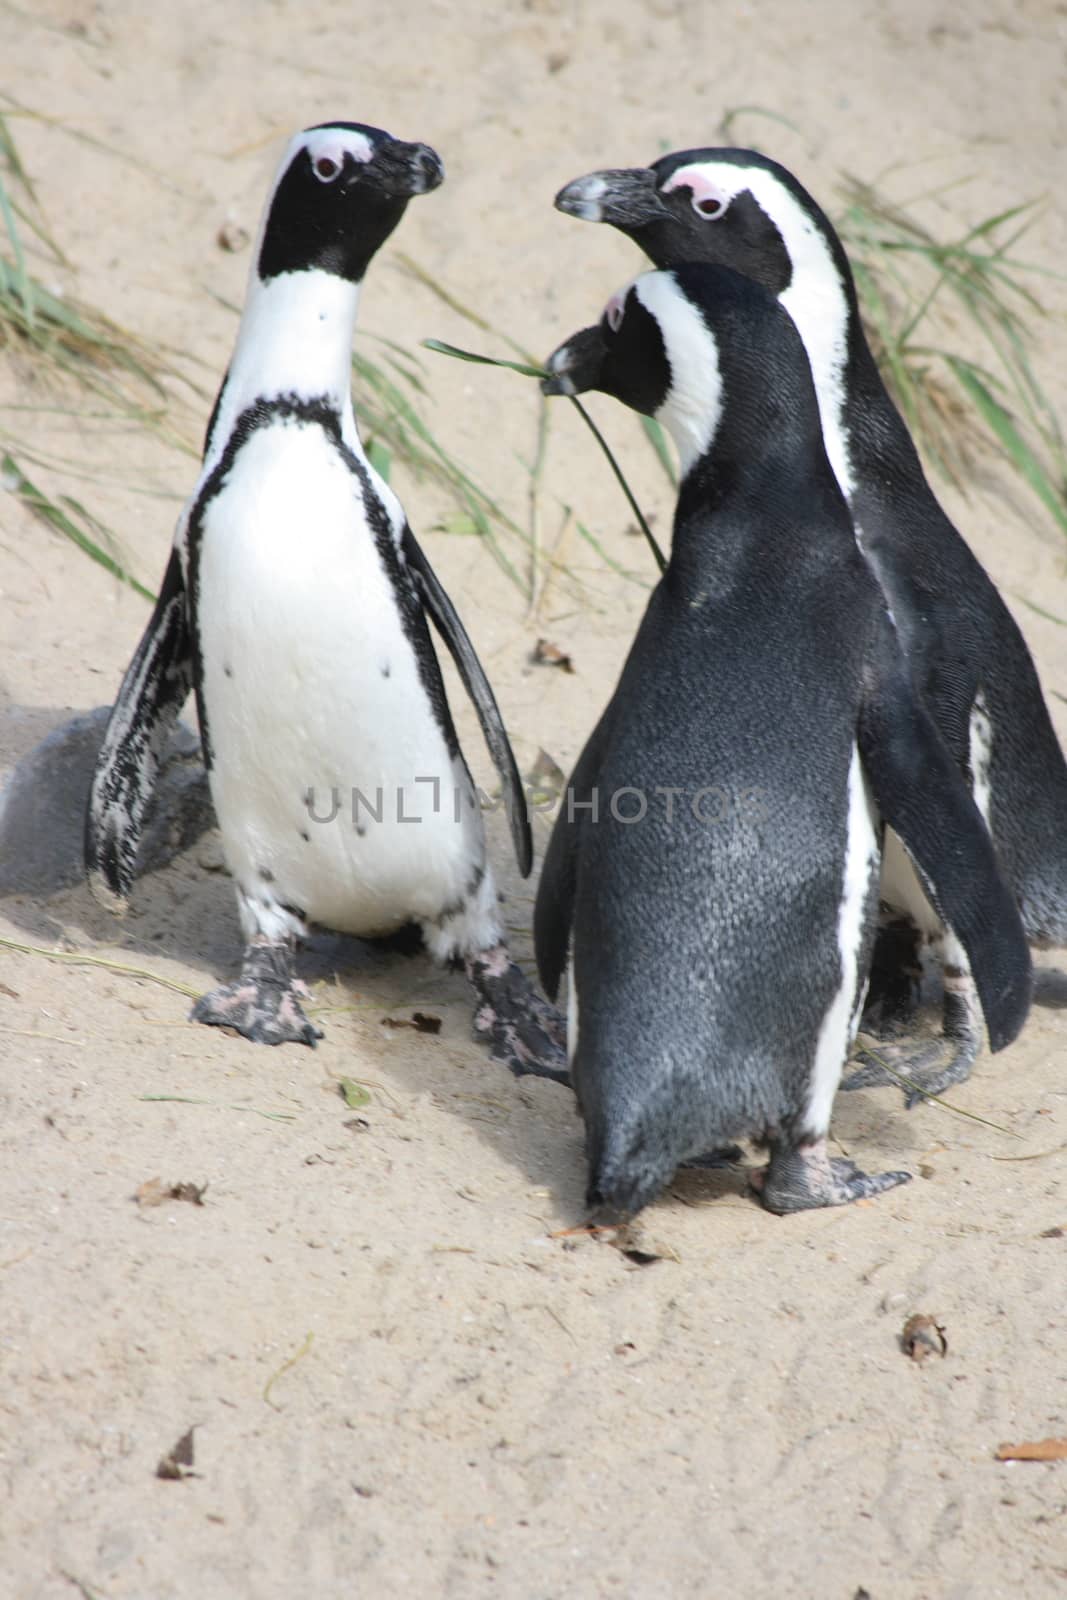 A group of Humboldt penguins (Spheniscus humboldti)